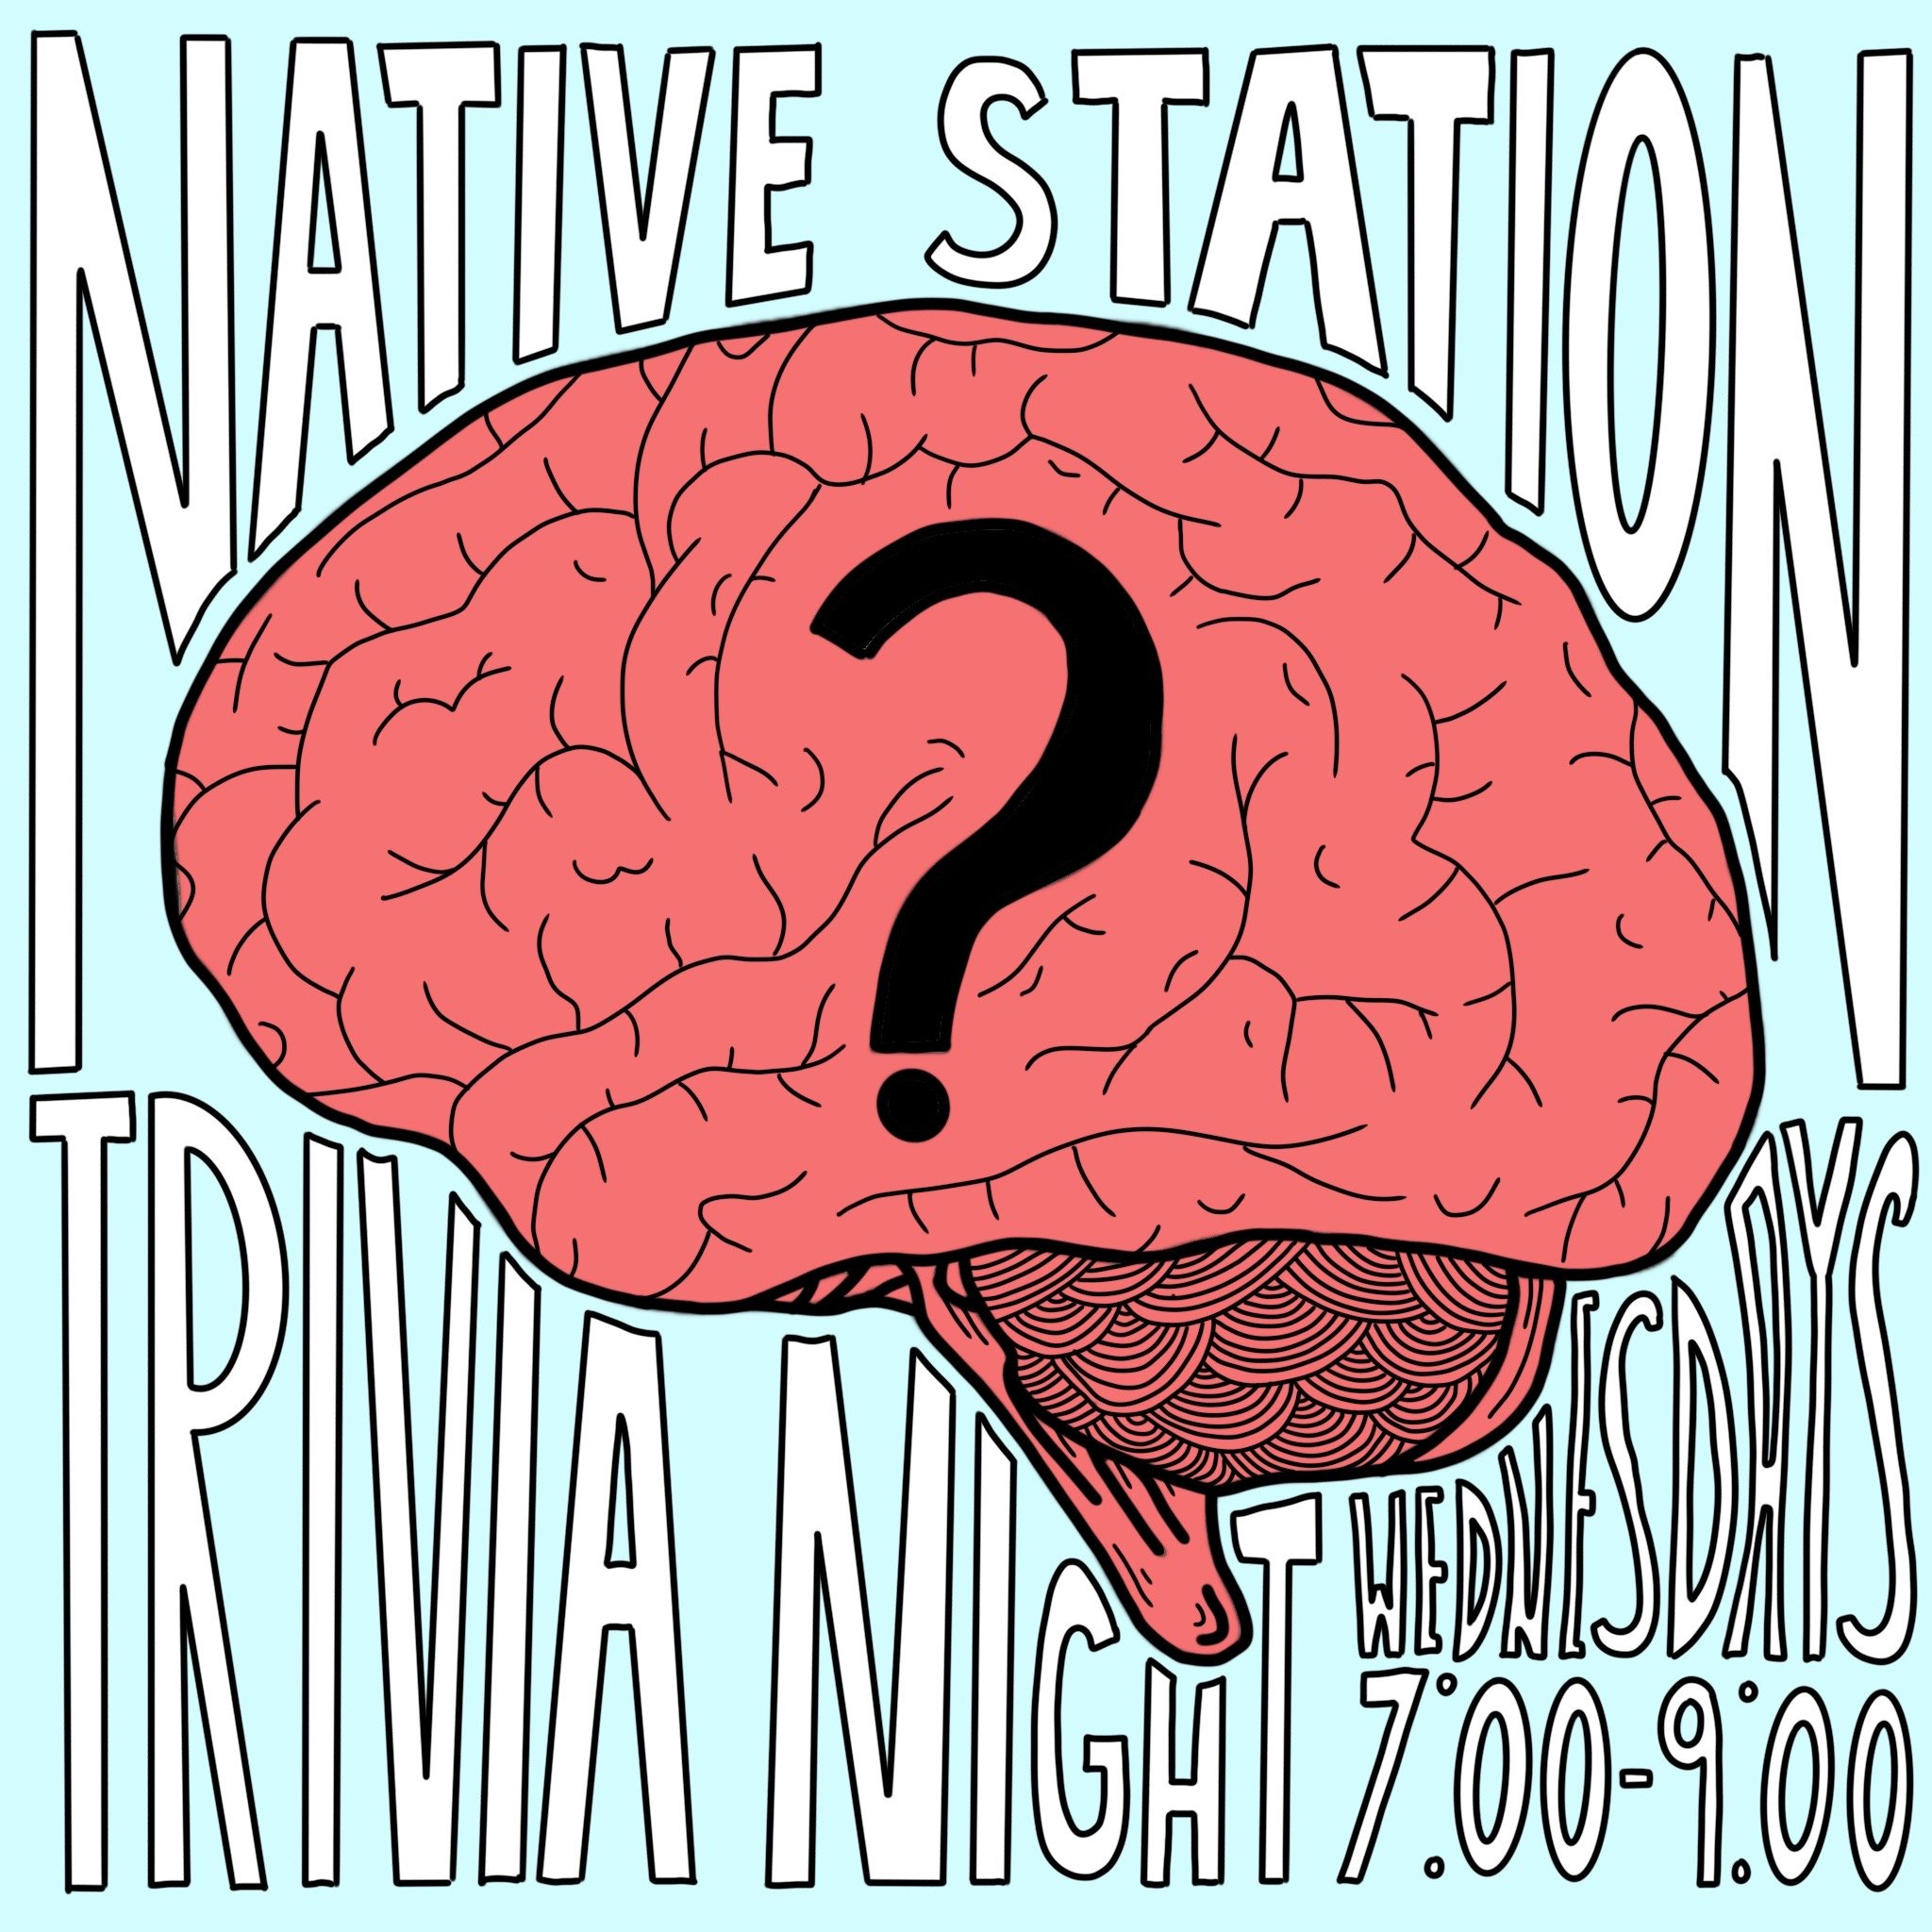 Native Station "Trivia Night" Logo